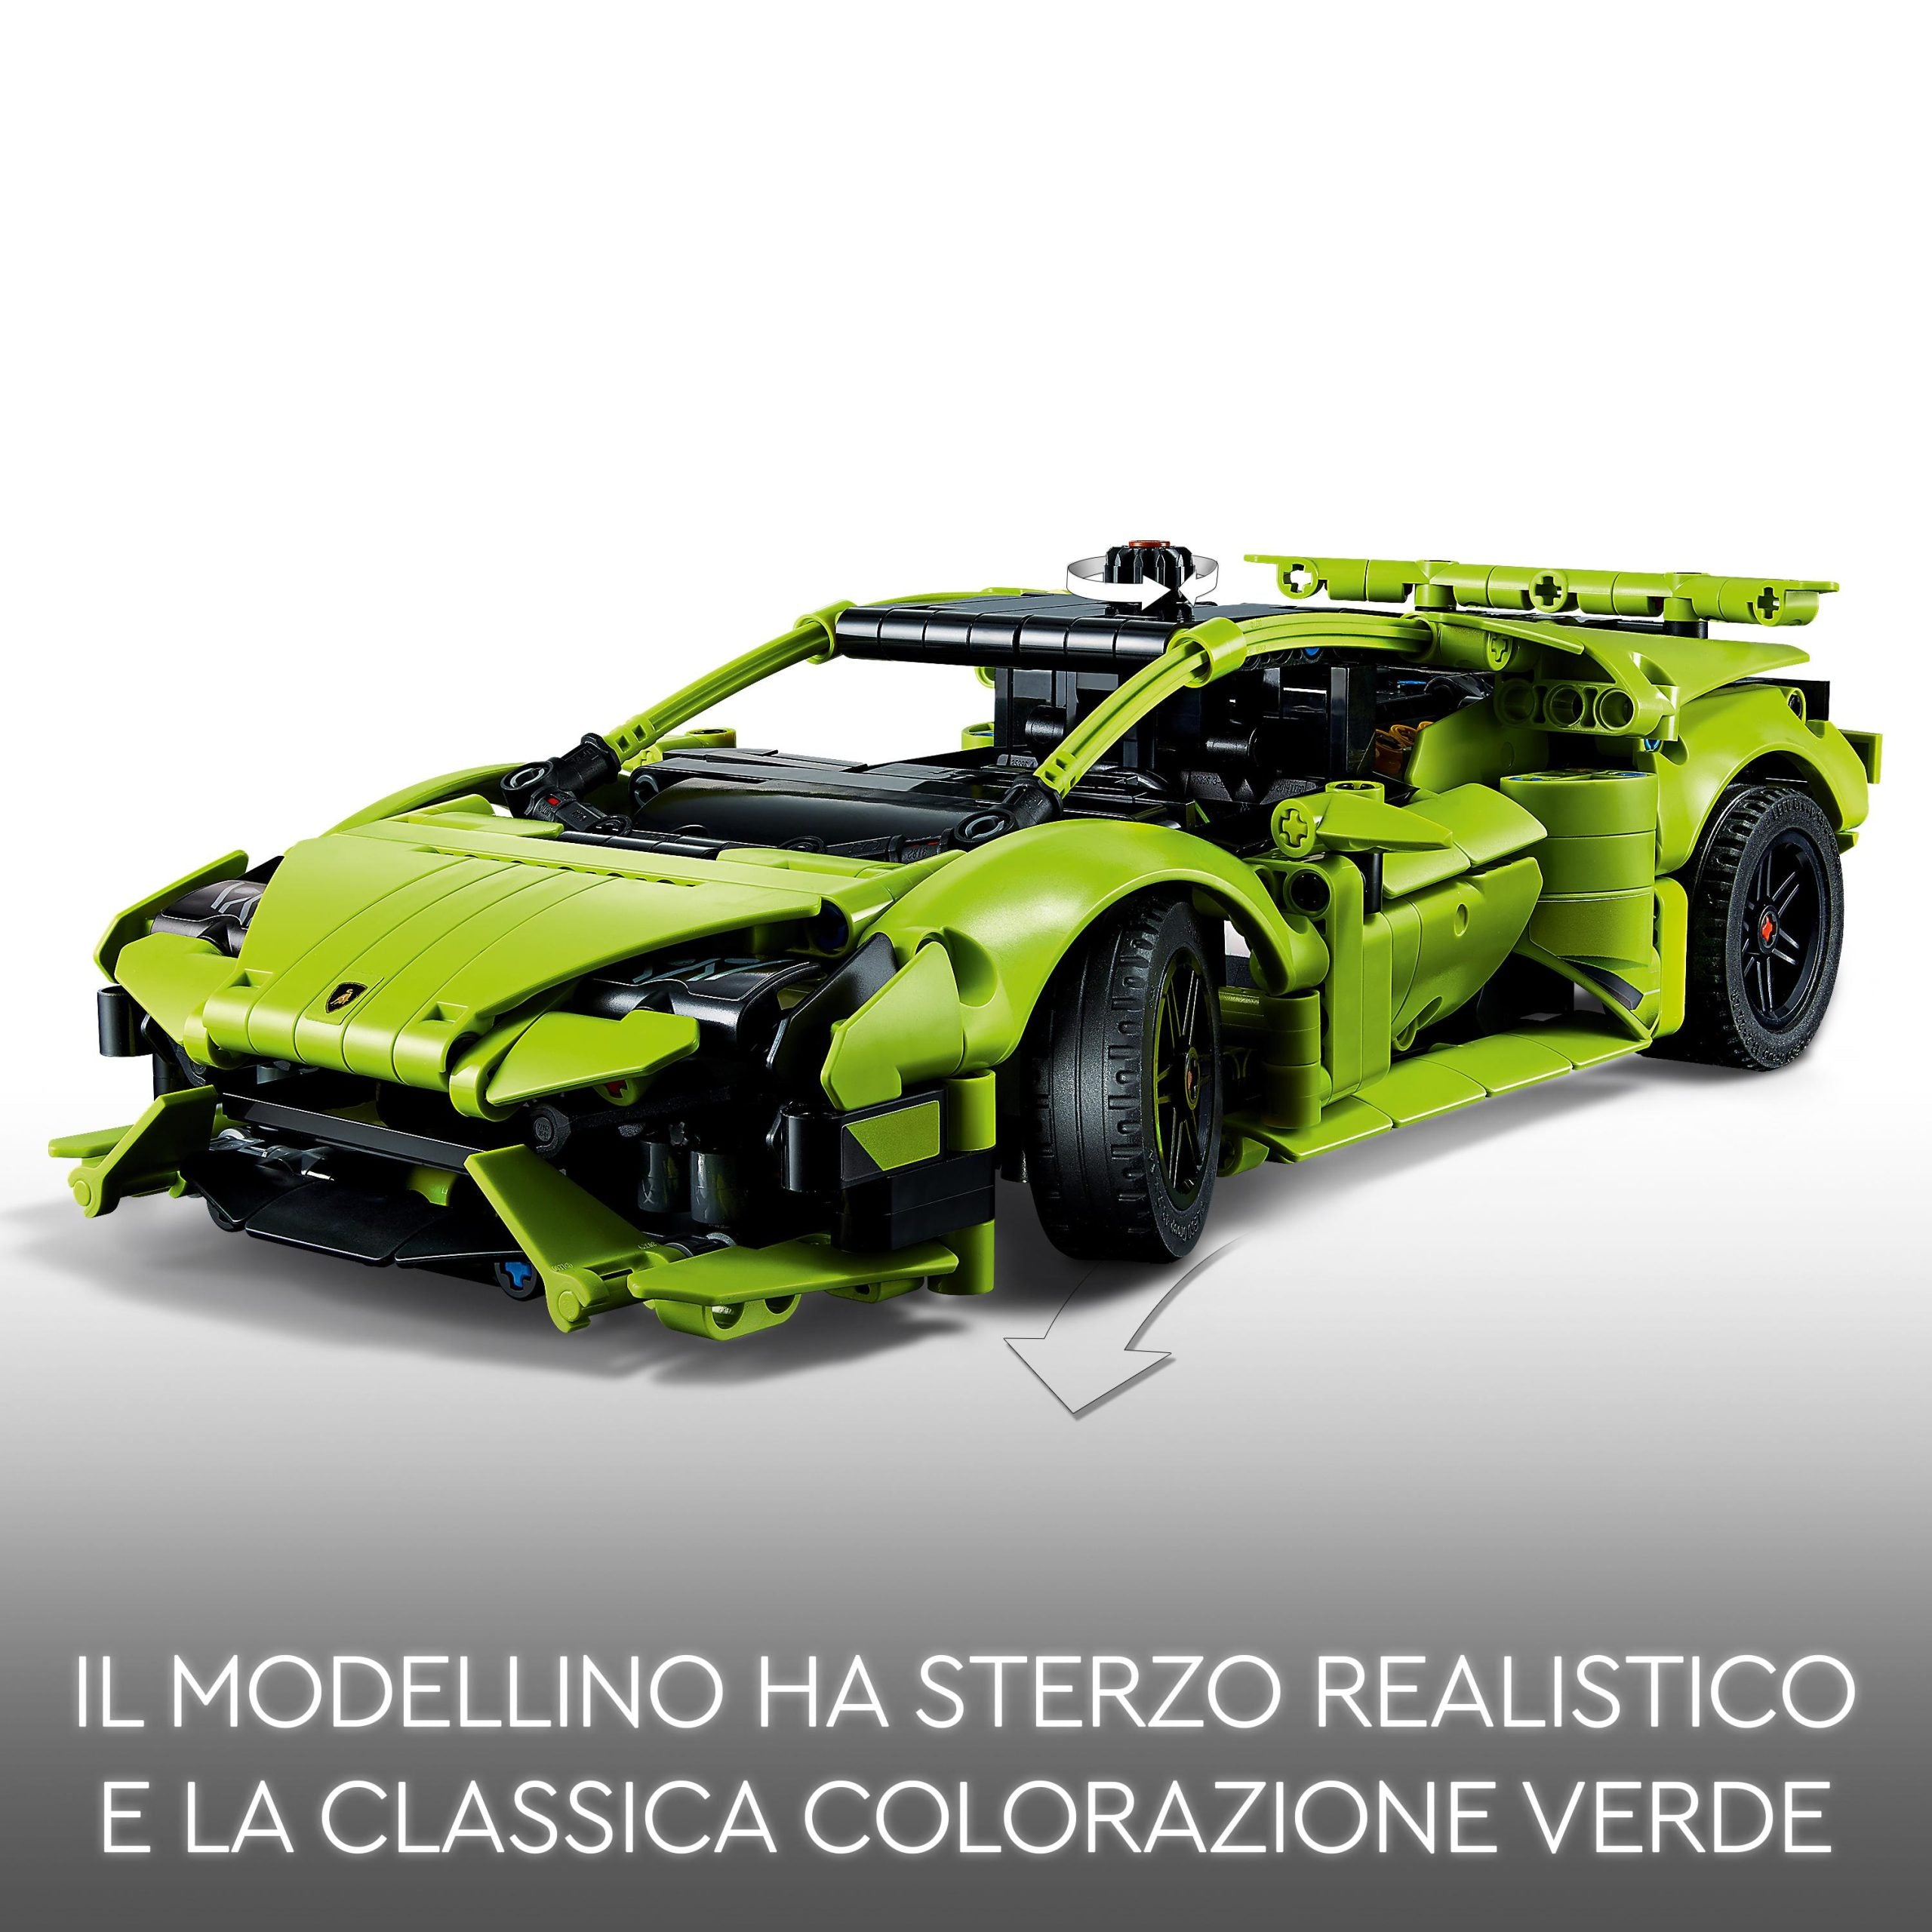 42161 LEGO Technic Lamborghini Huracn Tecnica